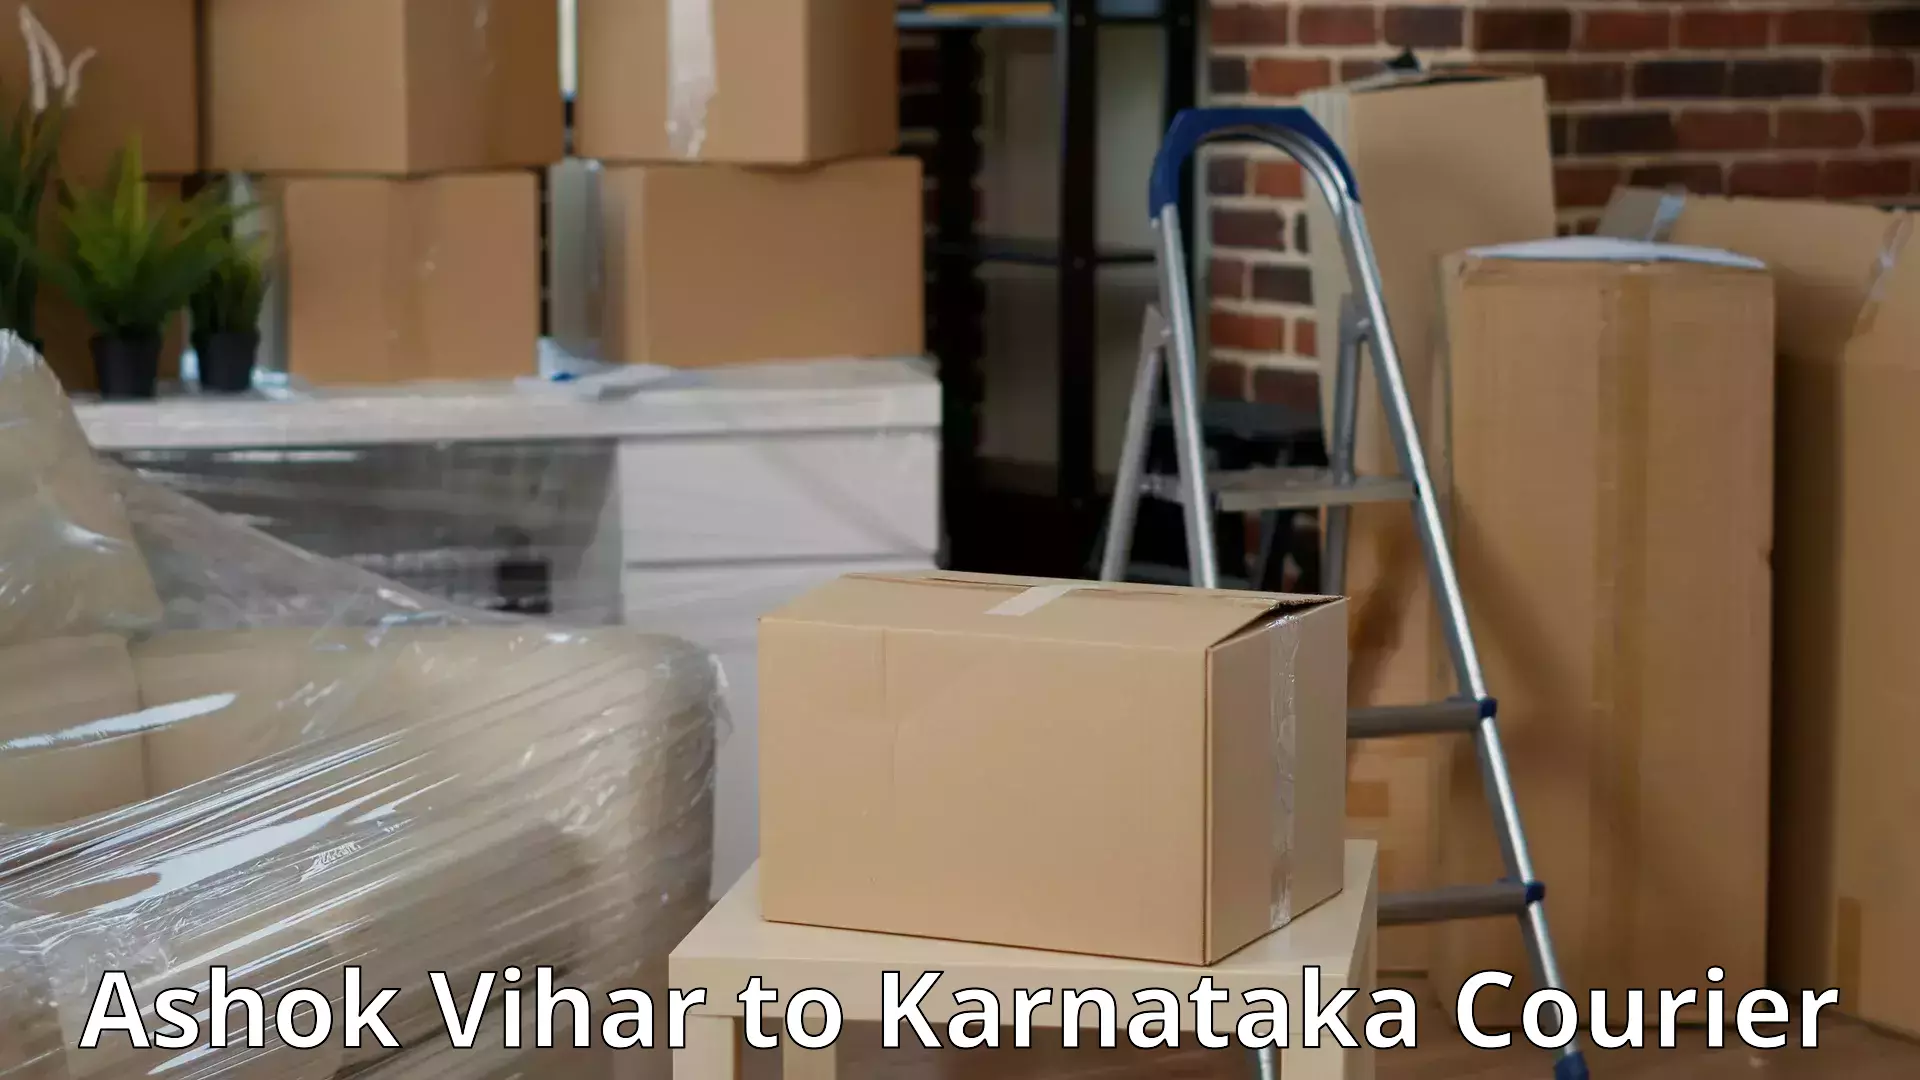 Budget-friendly movers Ashok Vihar to Karnataka